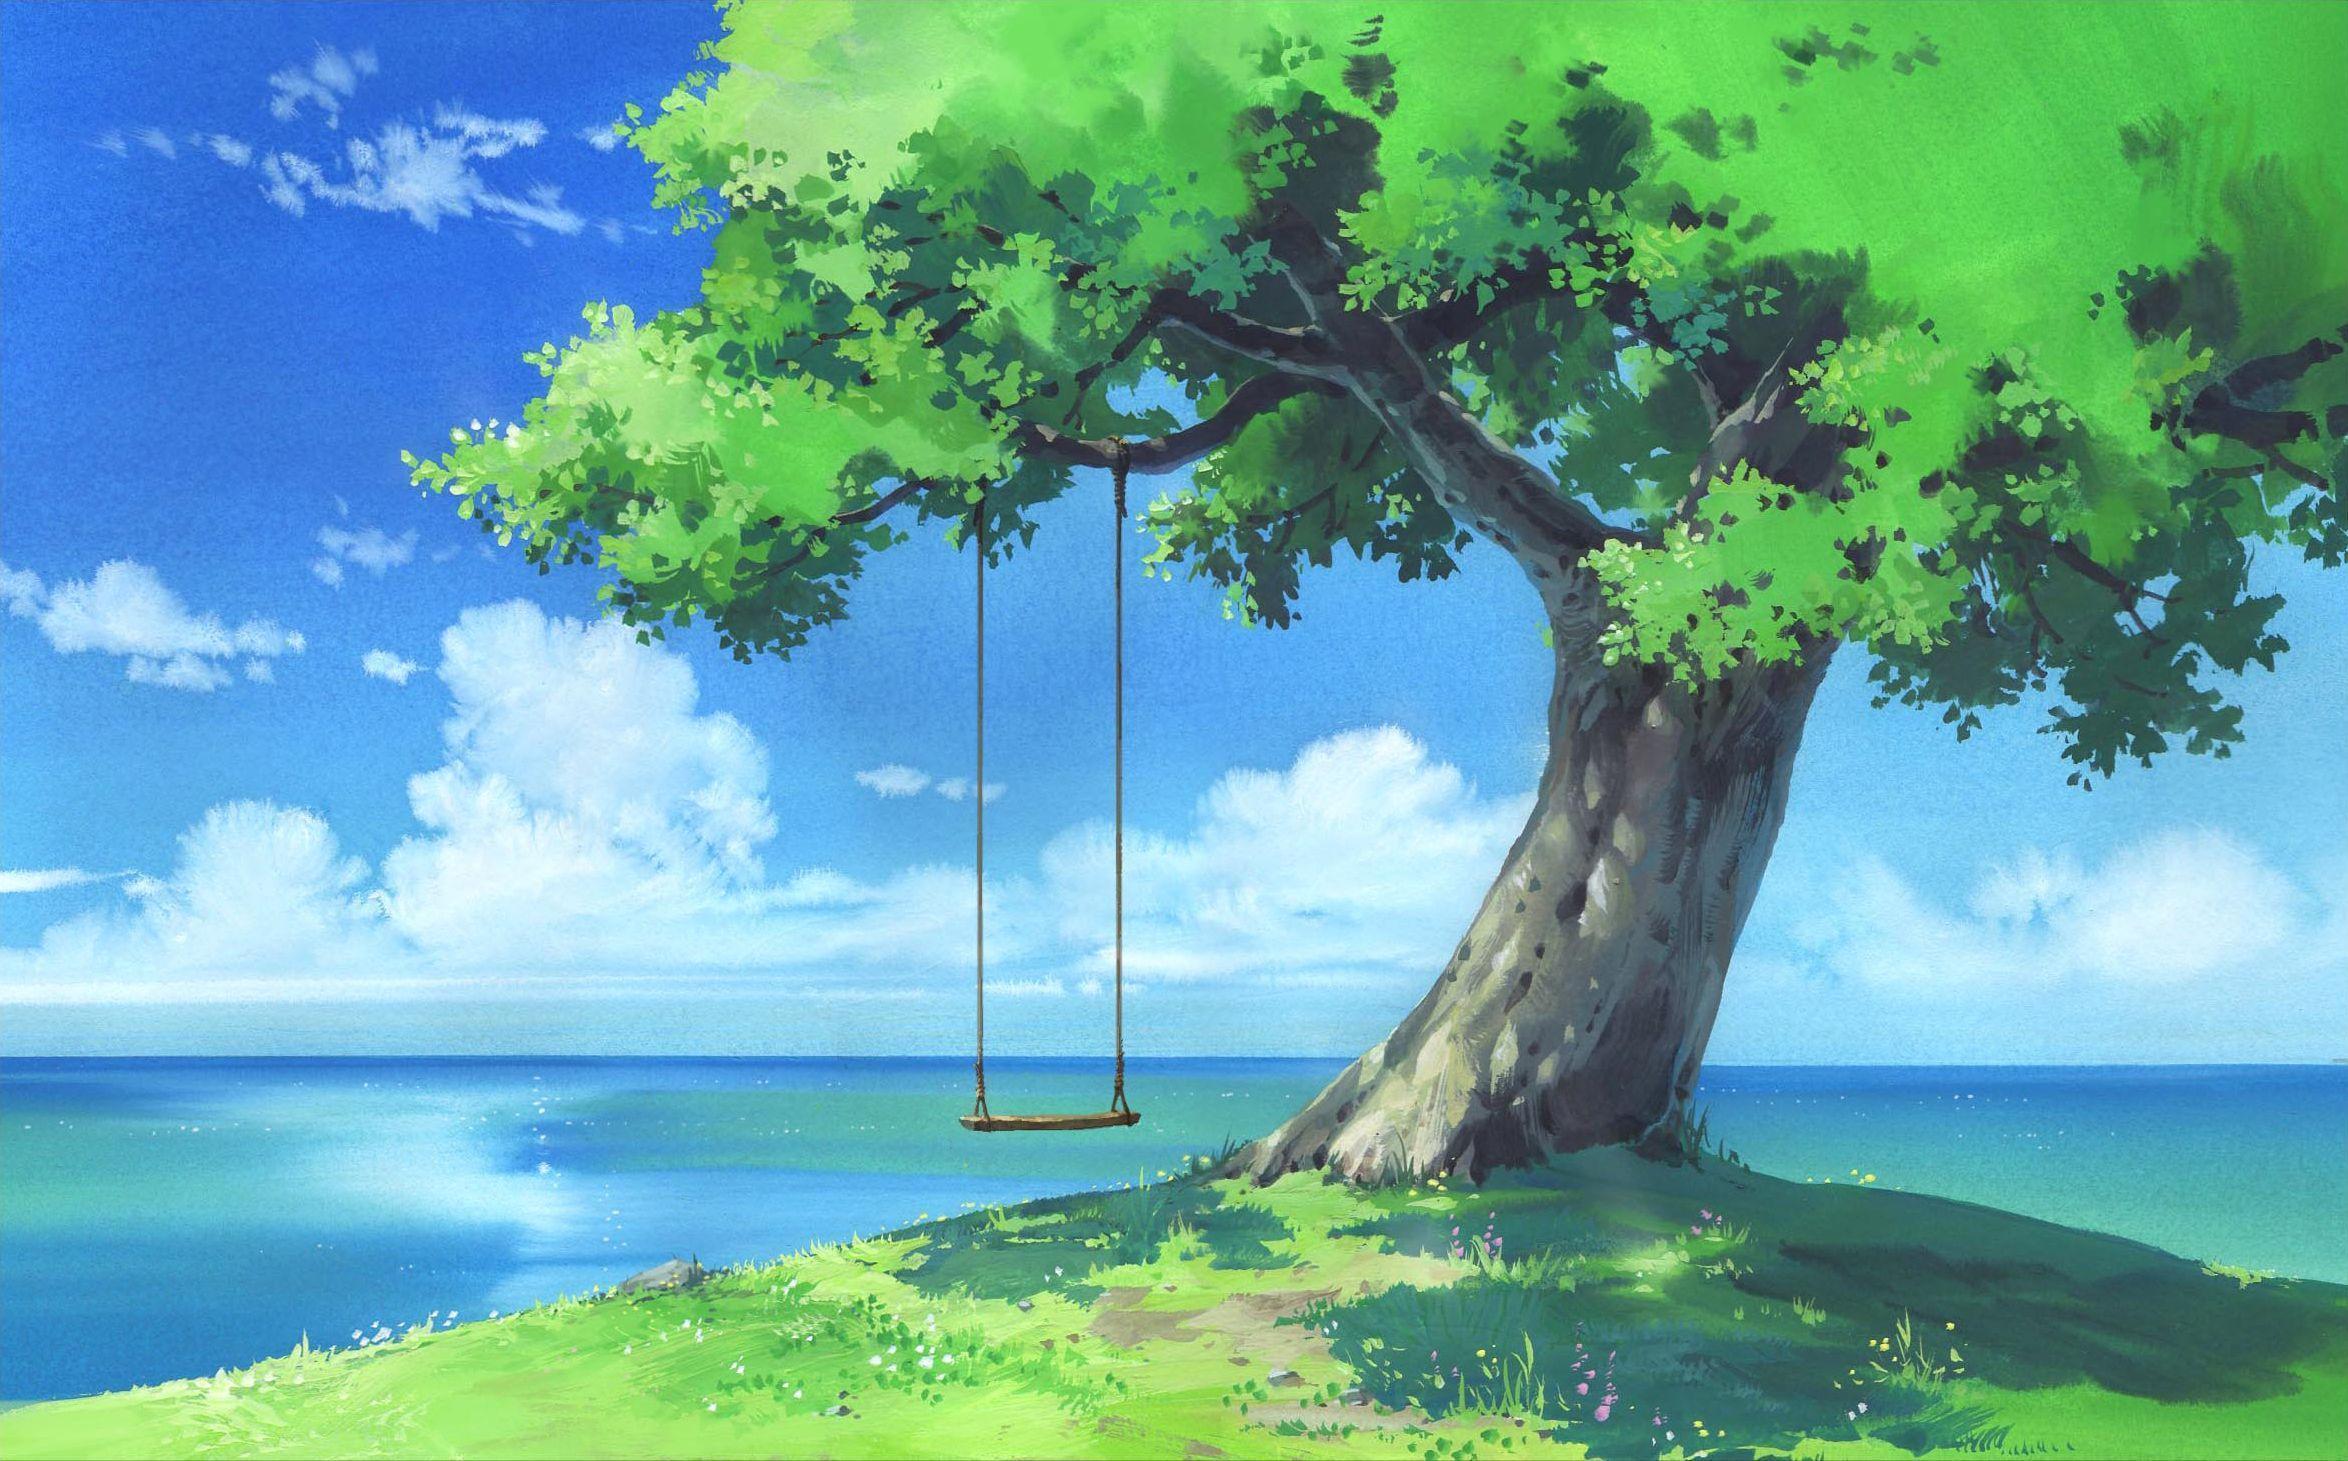 Anime Scenery wallpaper. Anime background. Scenery